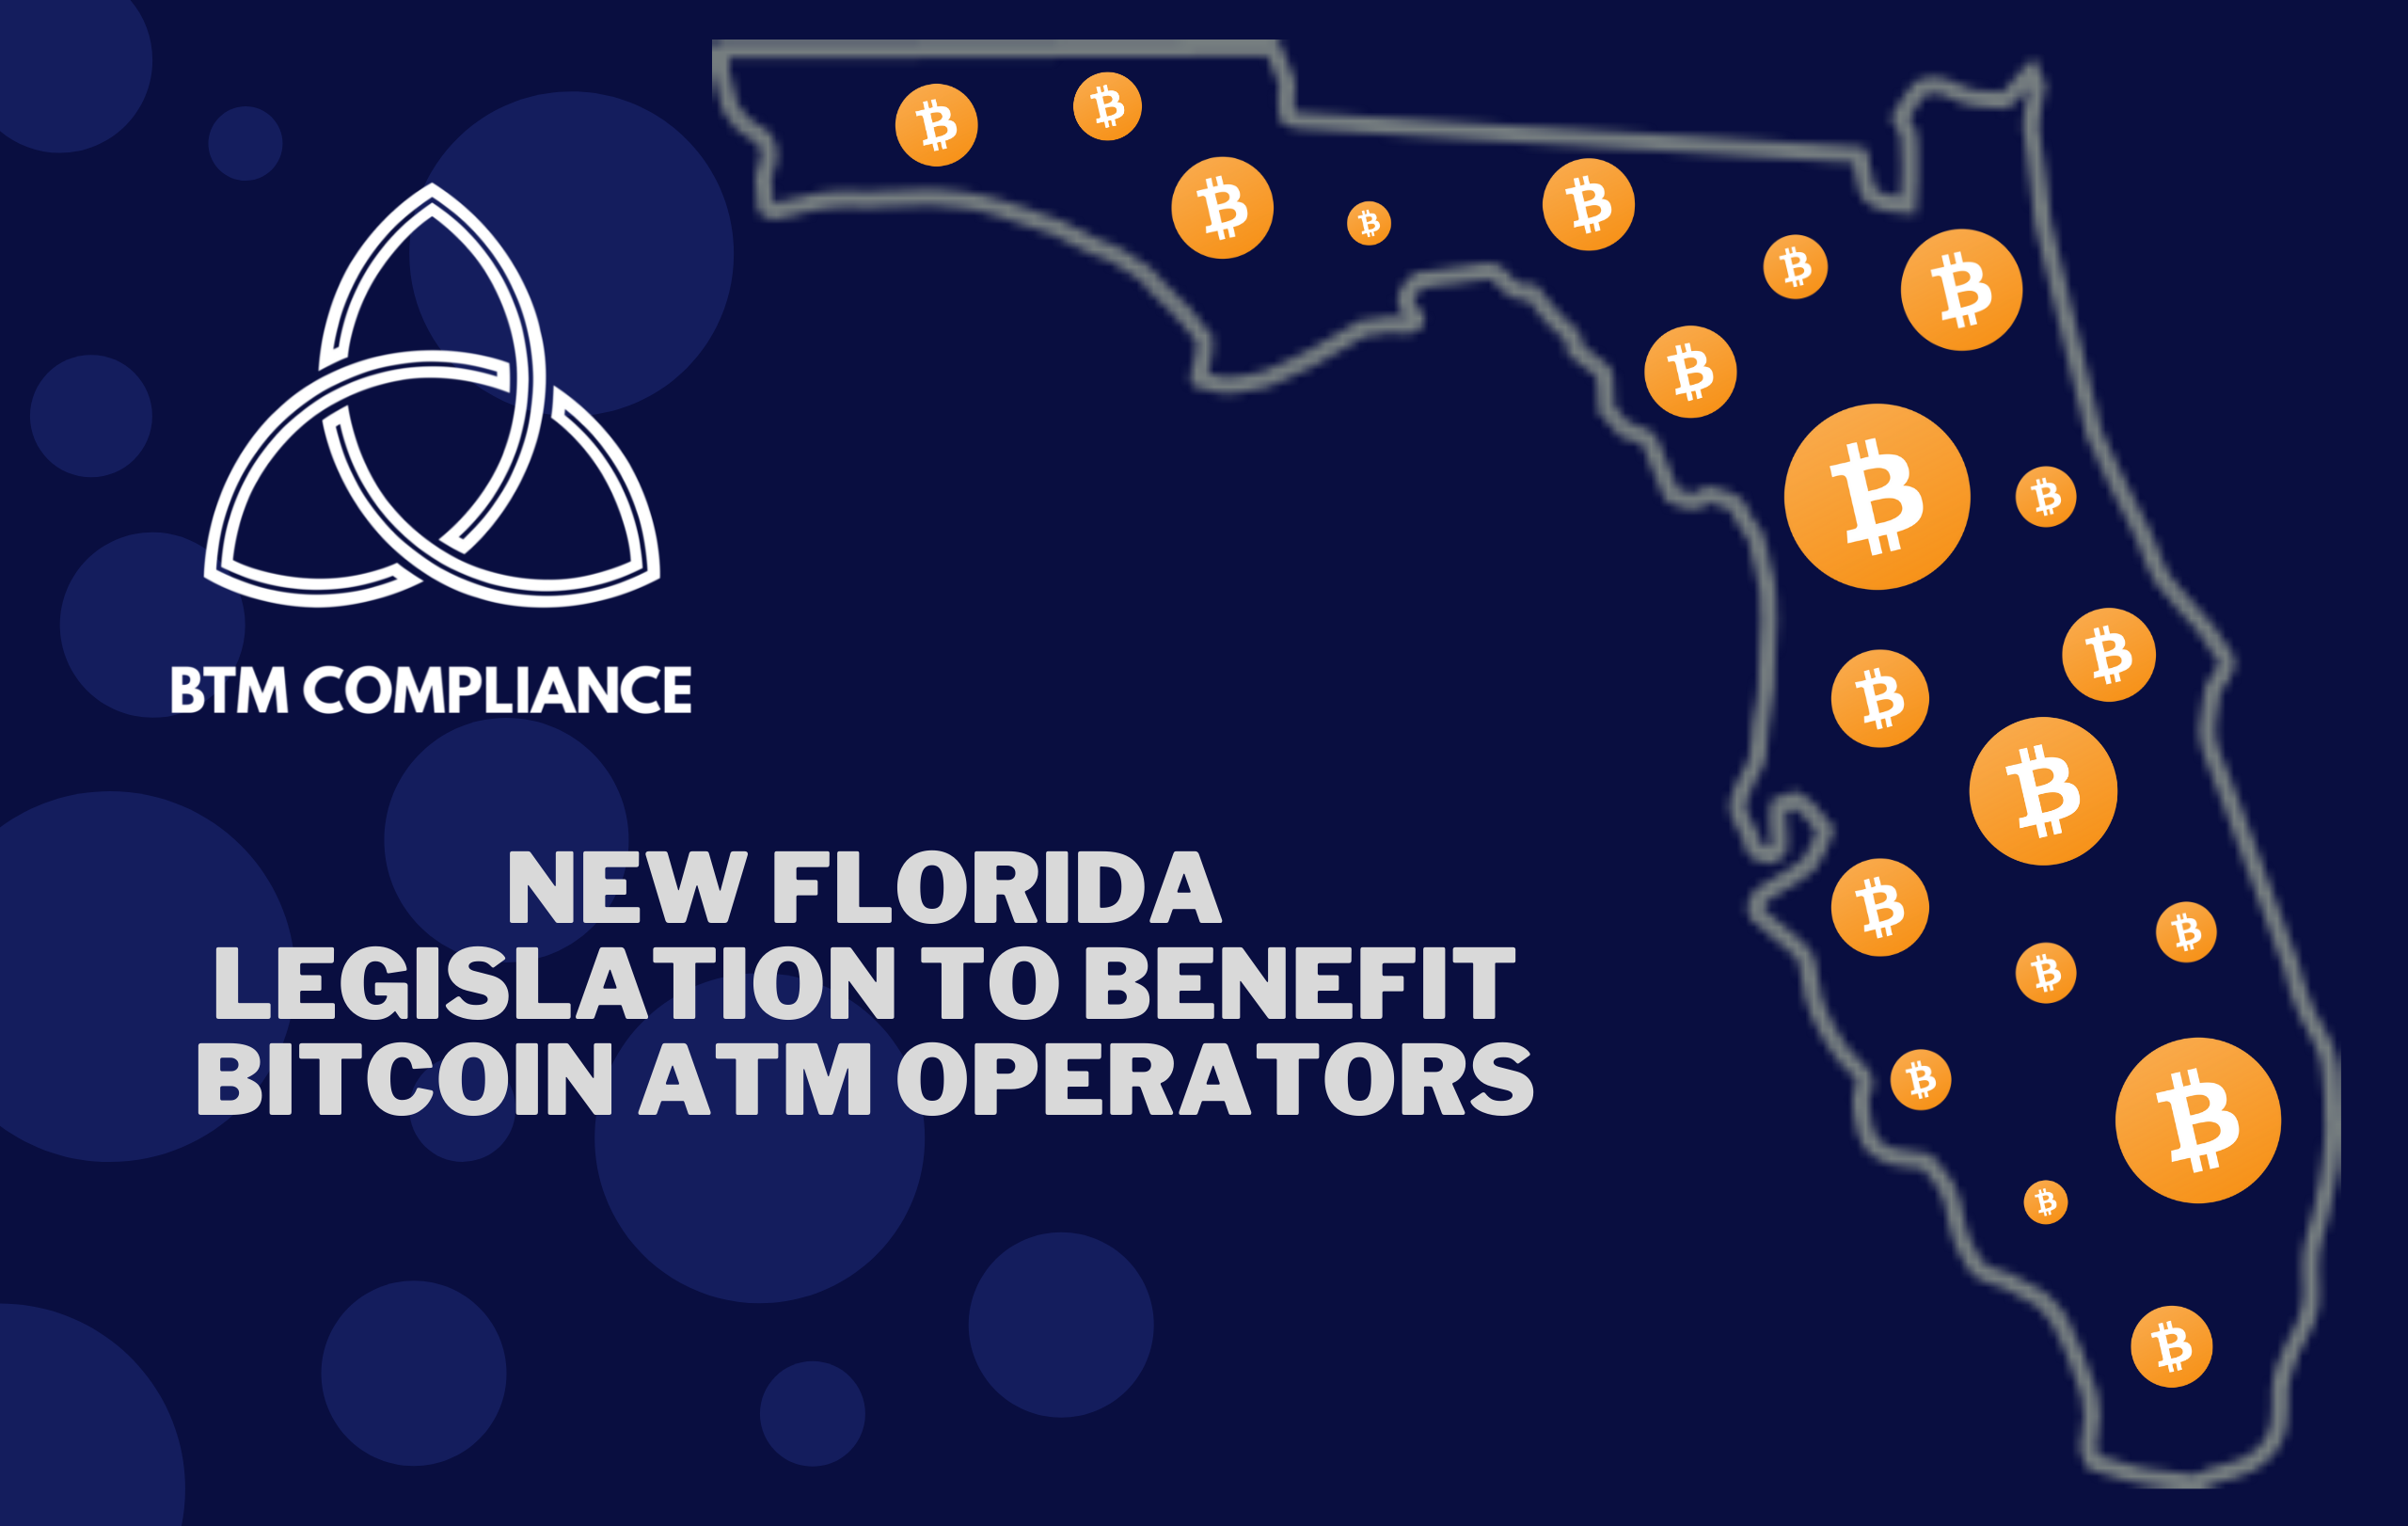 Explainer image for understanding the new Florida legislation for Bitcoin ATM operators